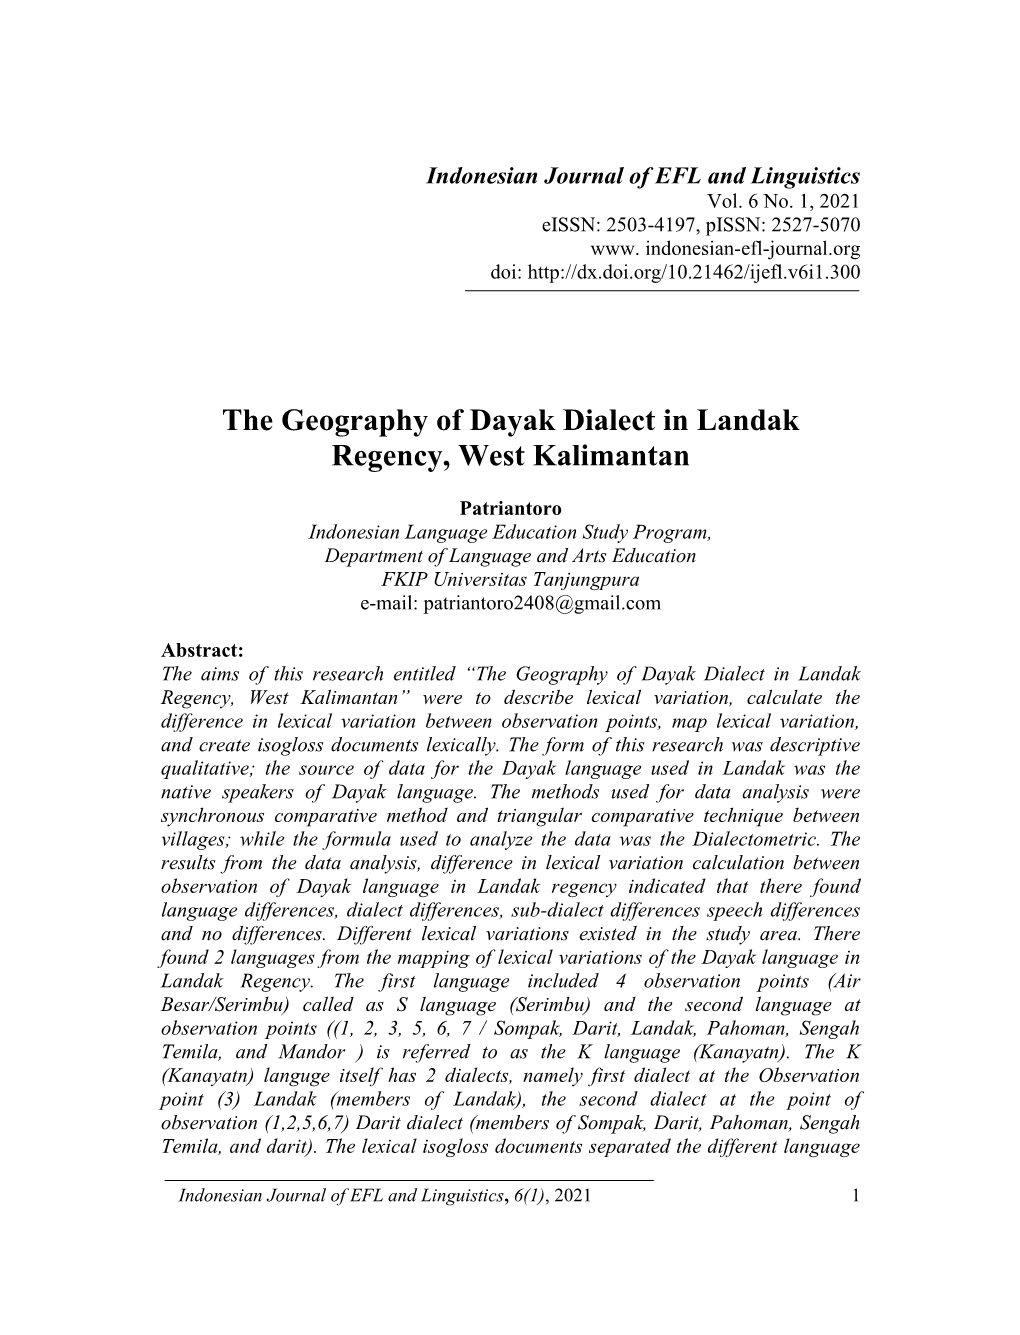 The Geography of Dayak Dialect in Landak Regency, West Kalimantan